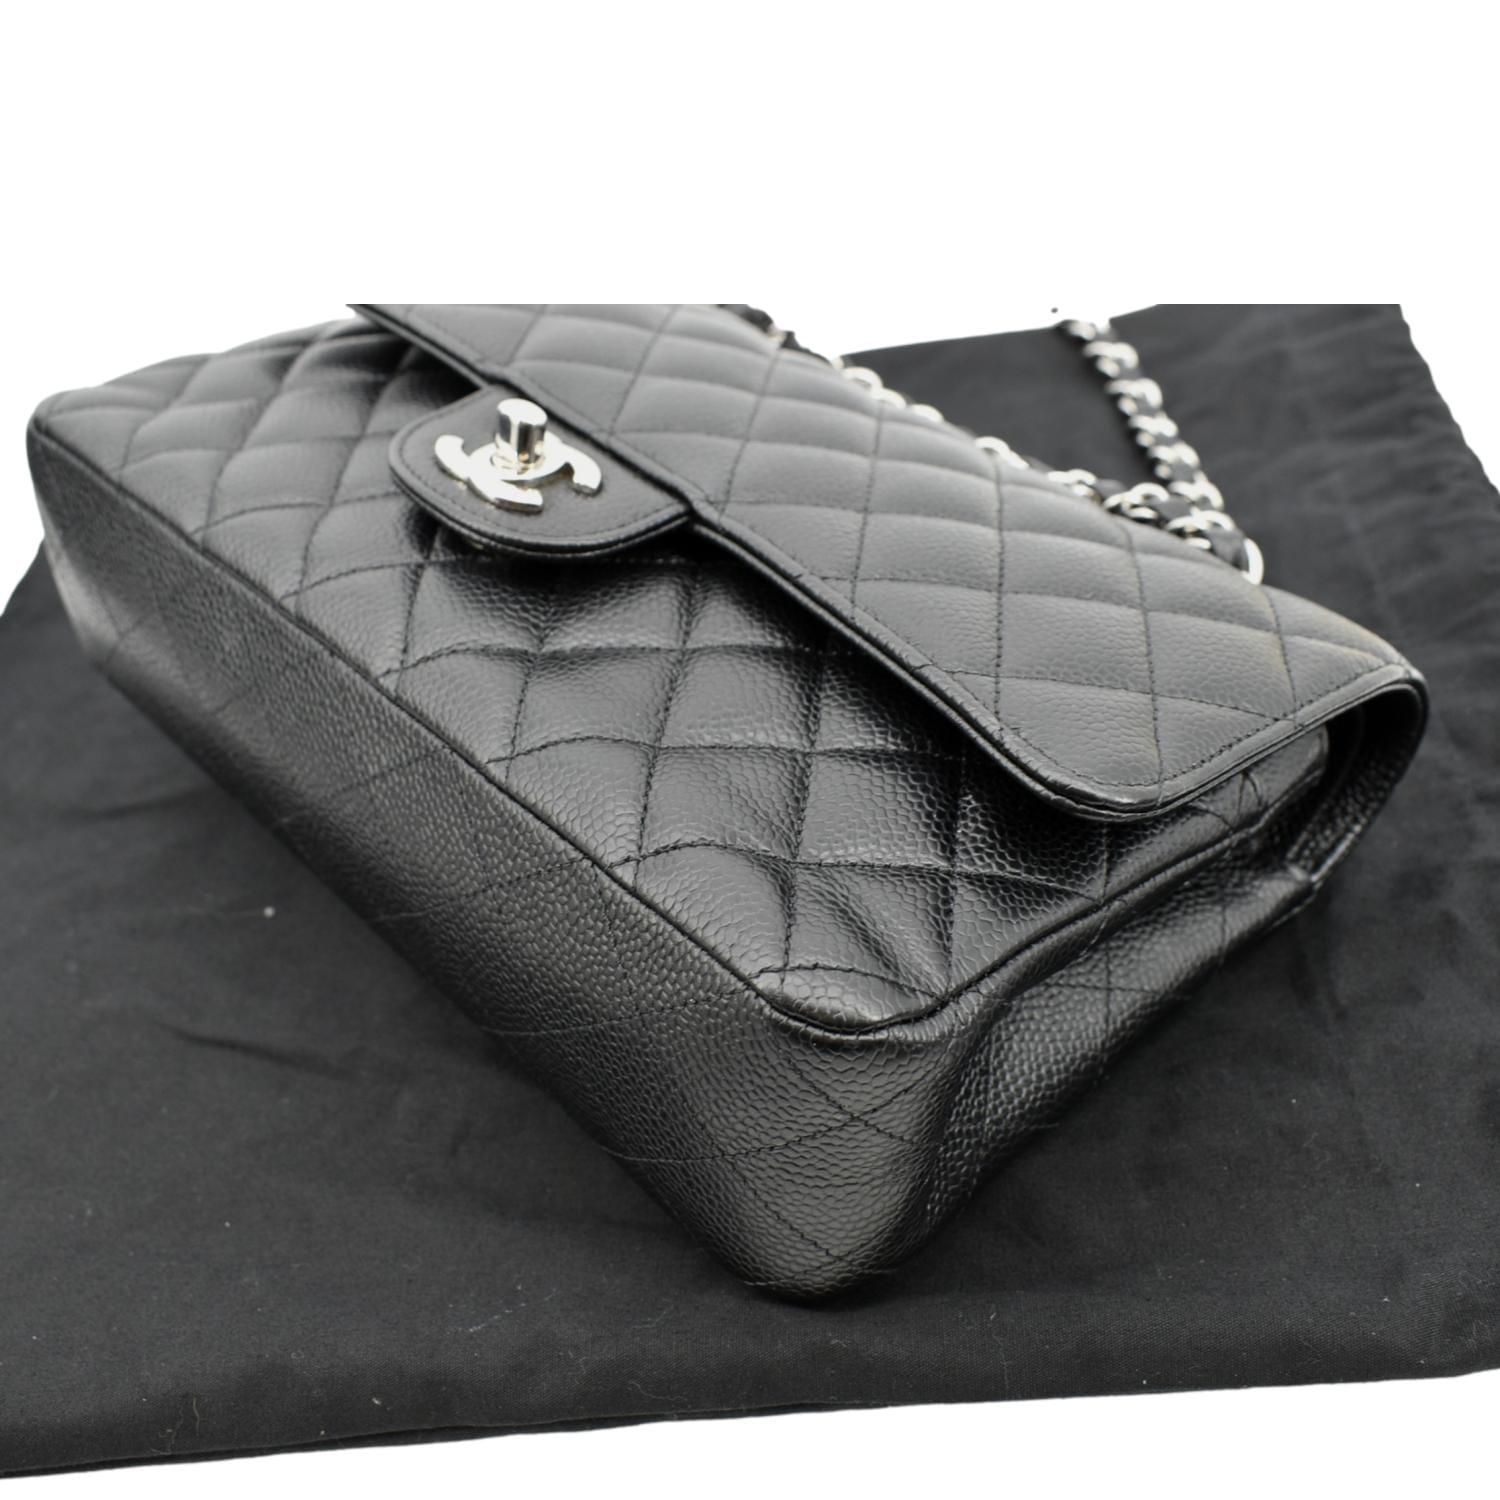 Like New* Chanel Medium Classic double flap Bag Black Caviar with